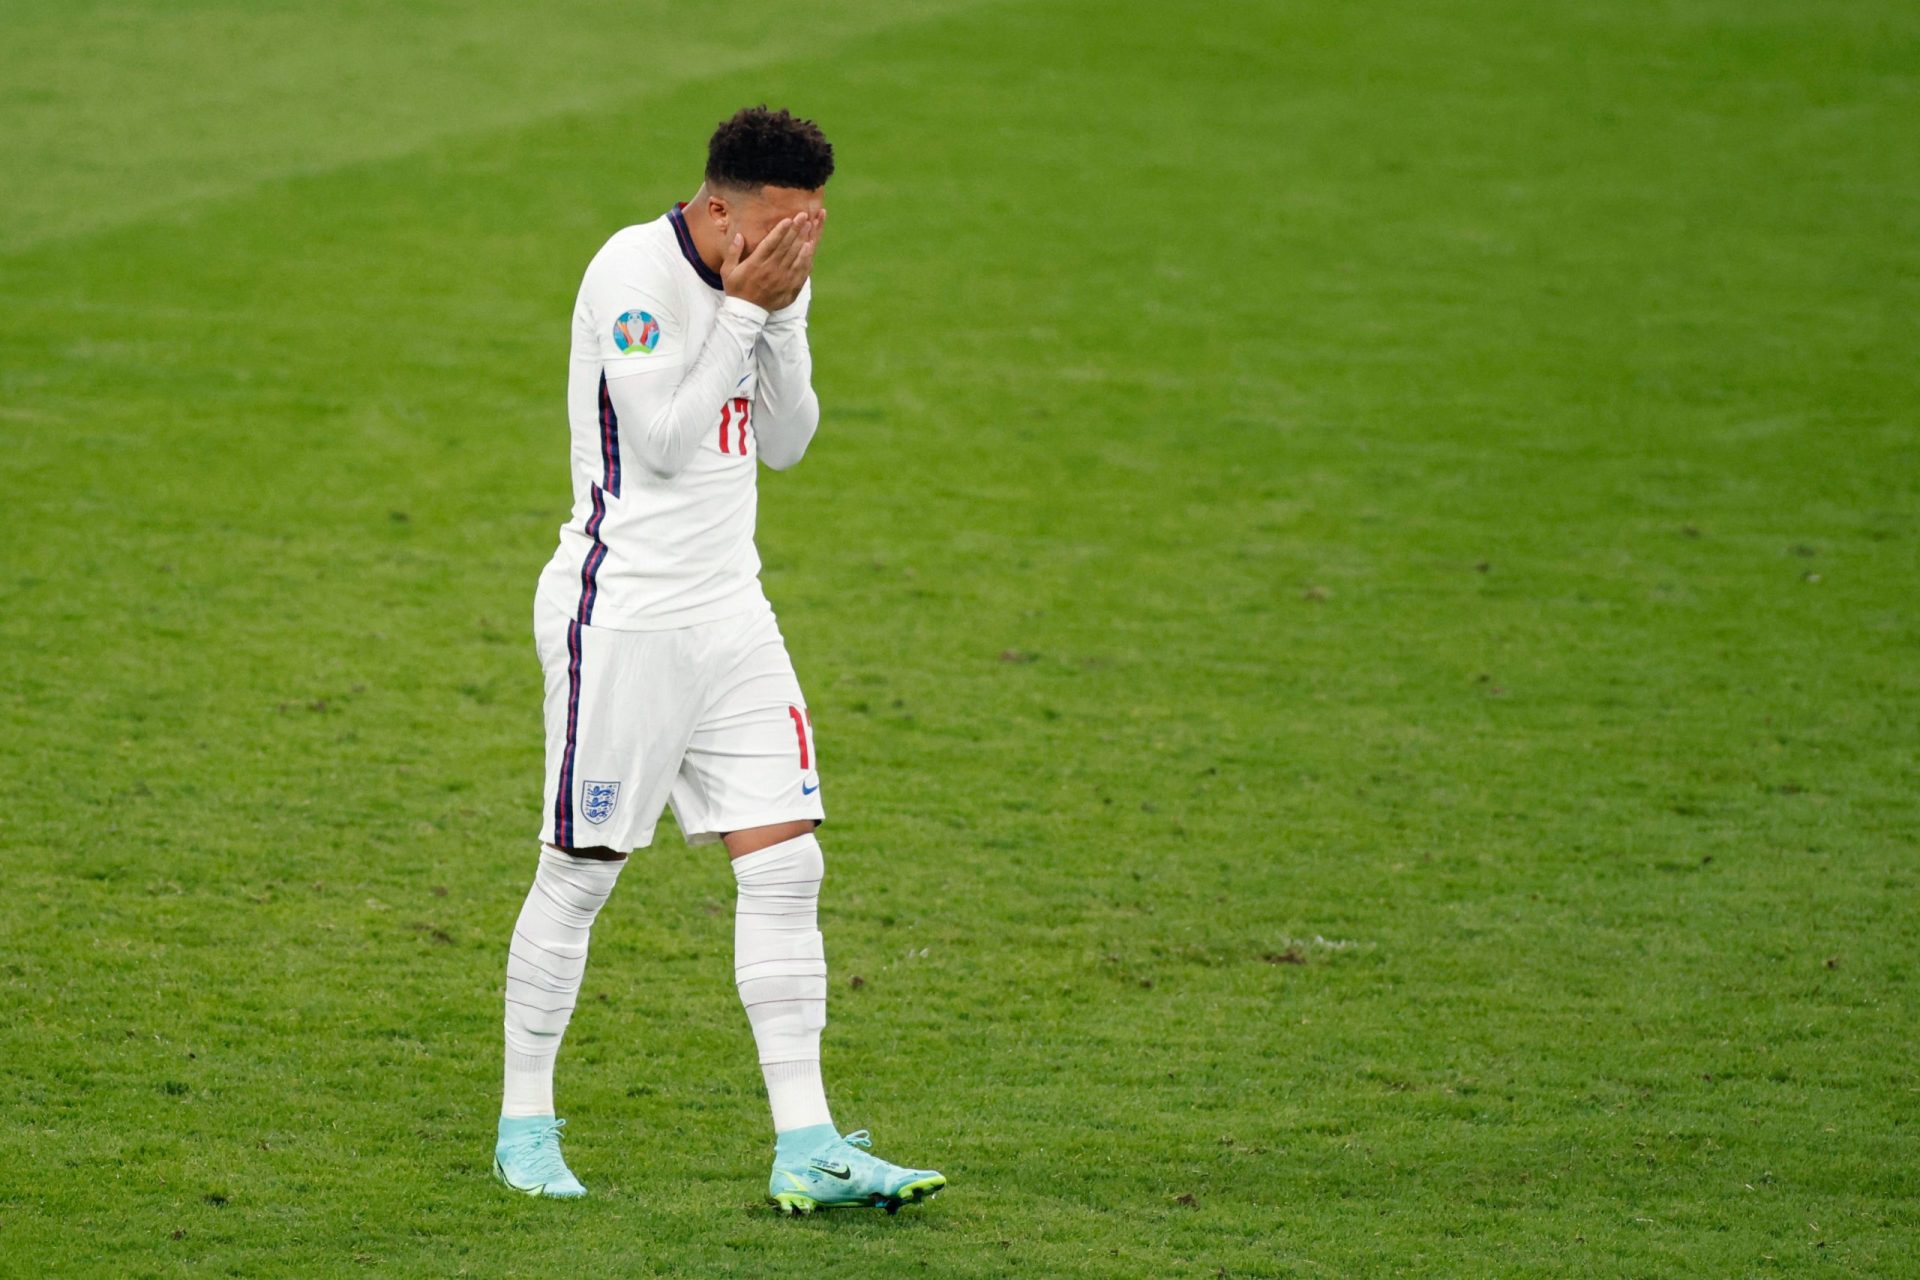 Jogadores de Inglaterra que falharam grandes penalidades vítimas de comentários racistas após final do Euro’2020